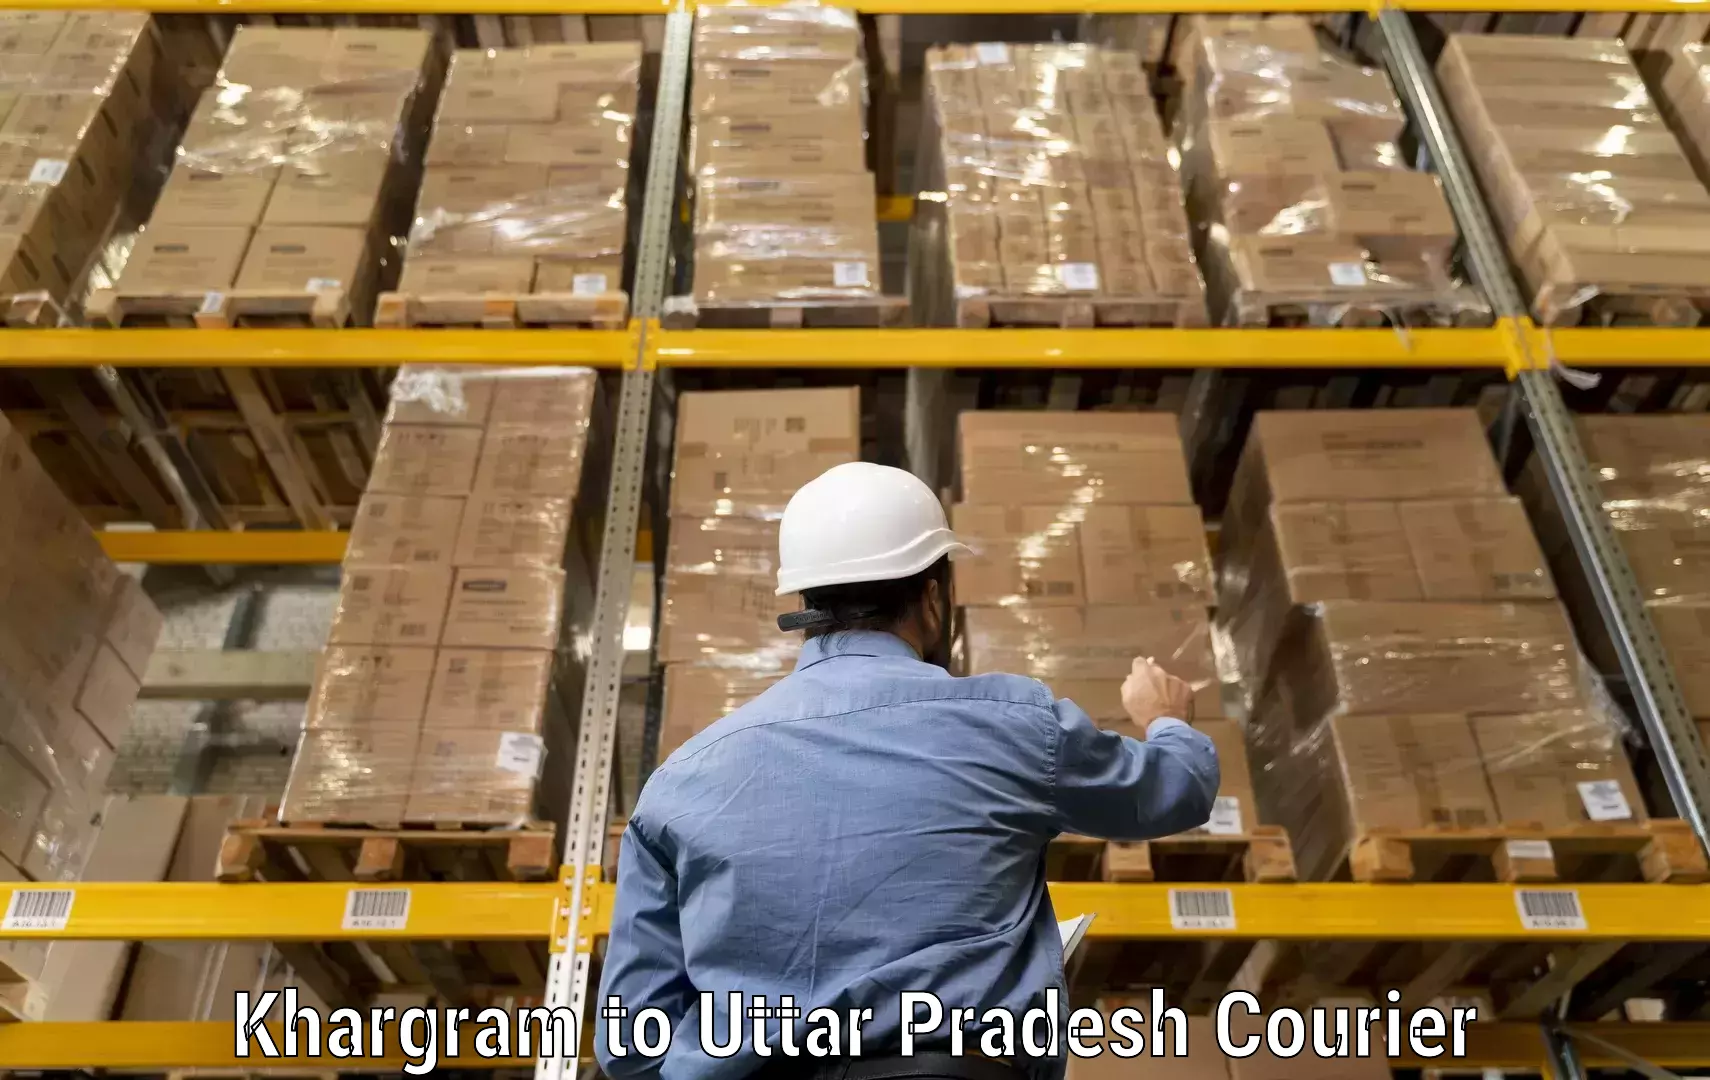 Flexible delivery scheduling Khargram to Vrindavan